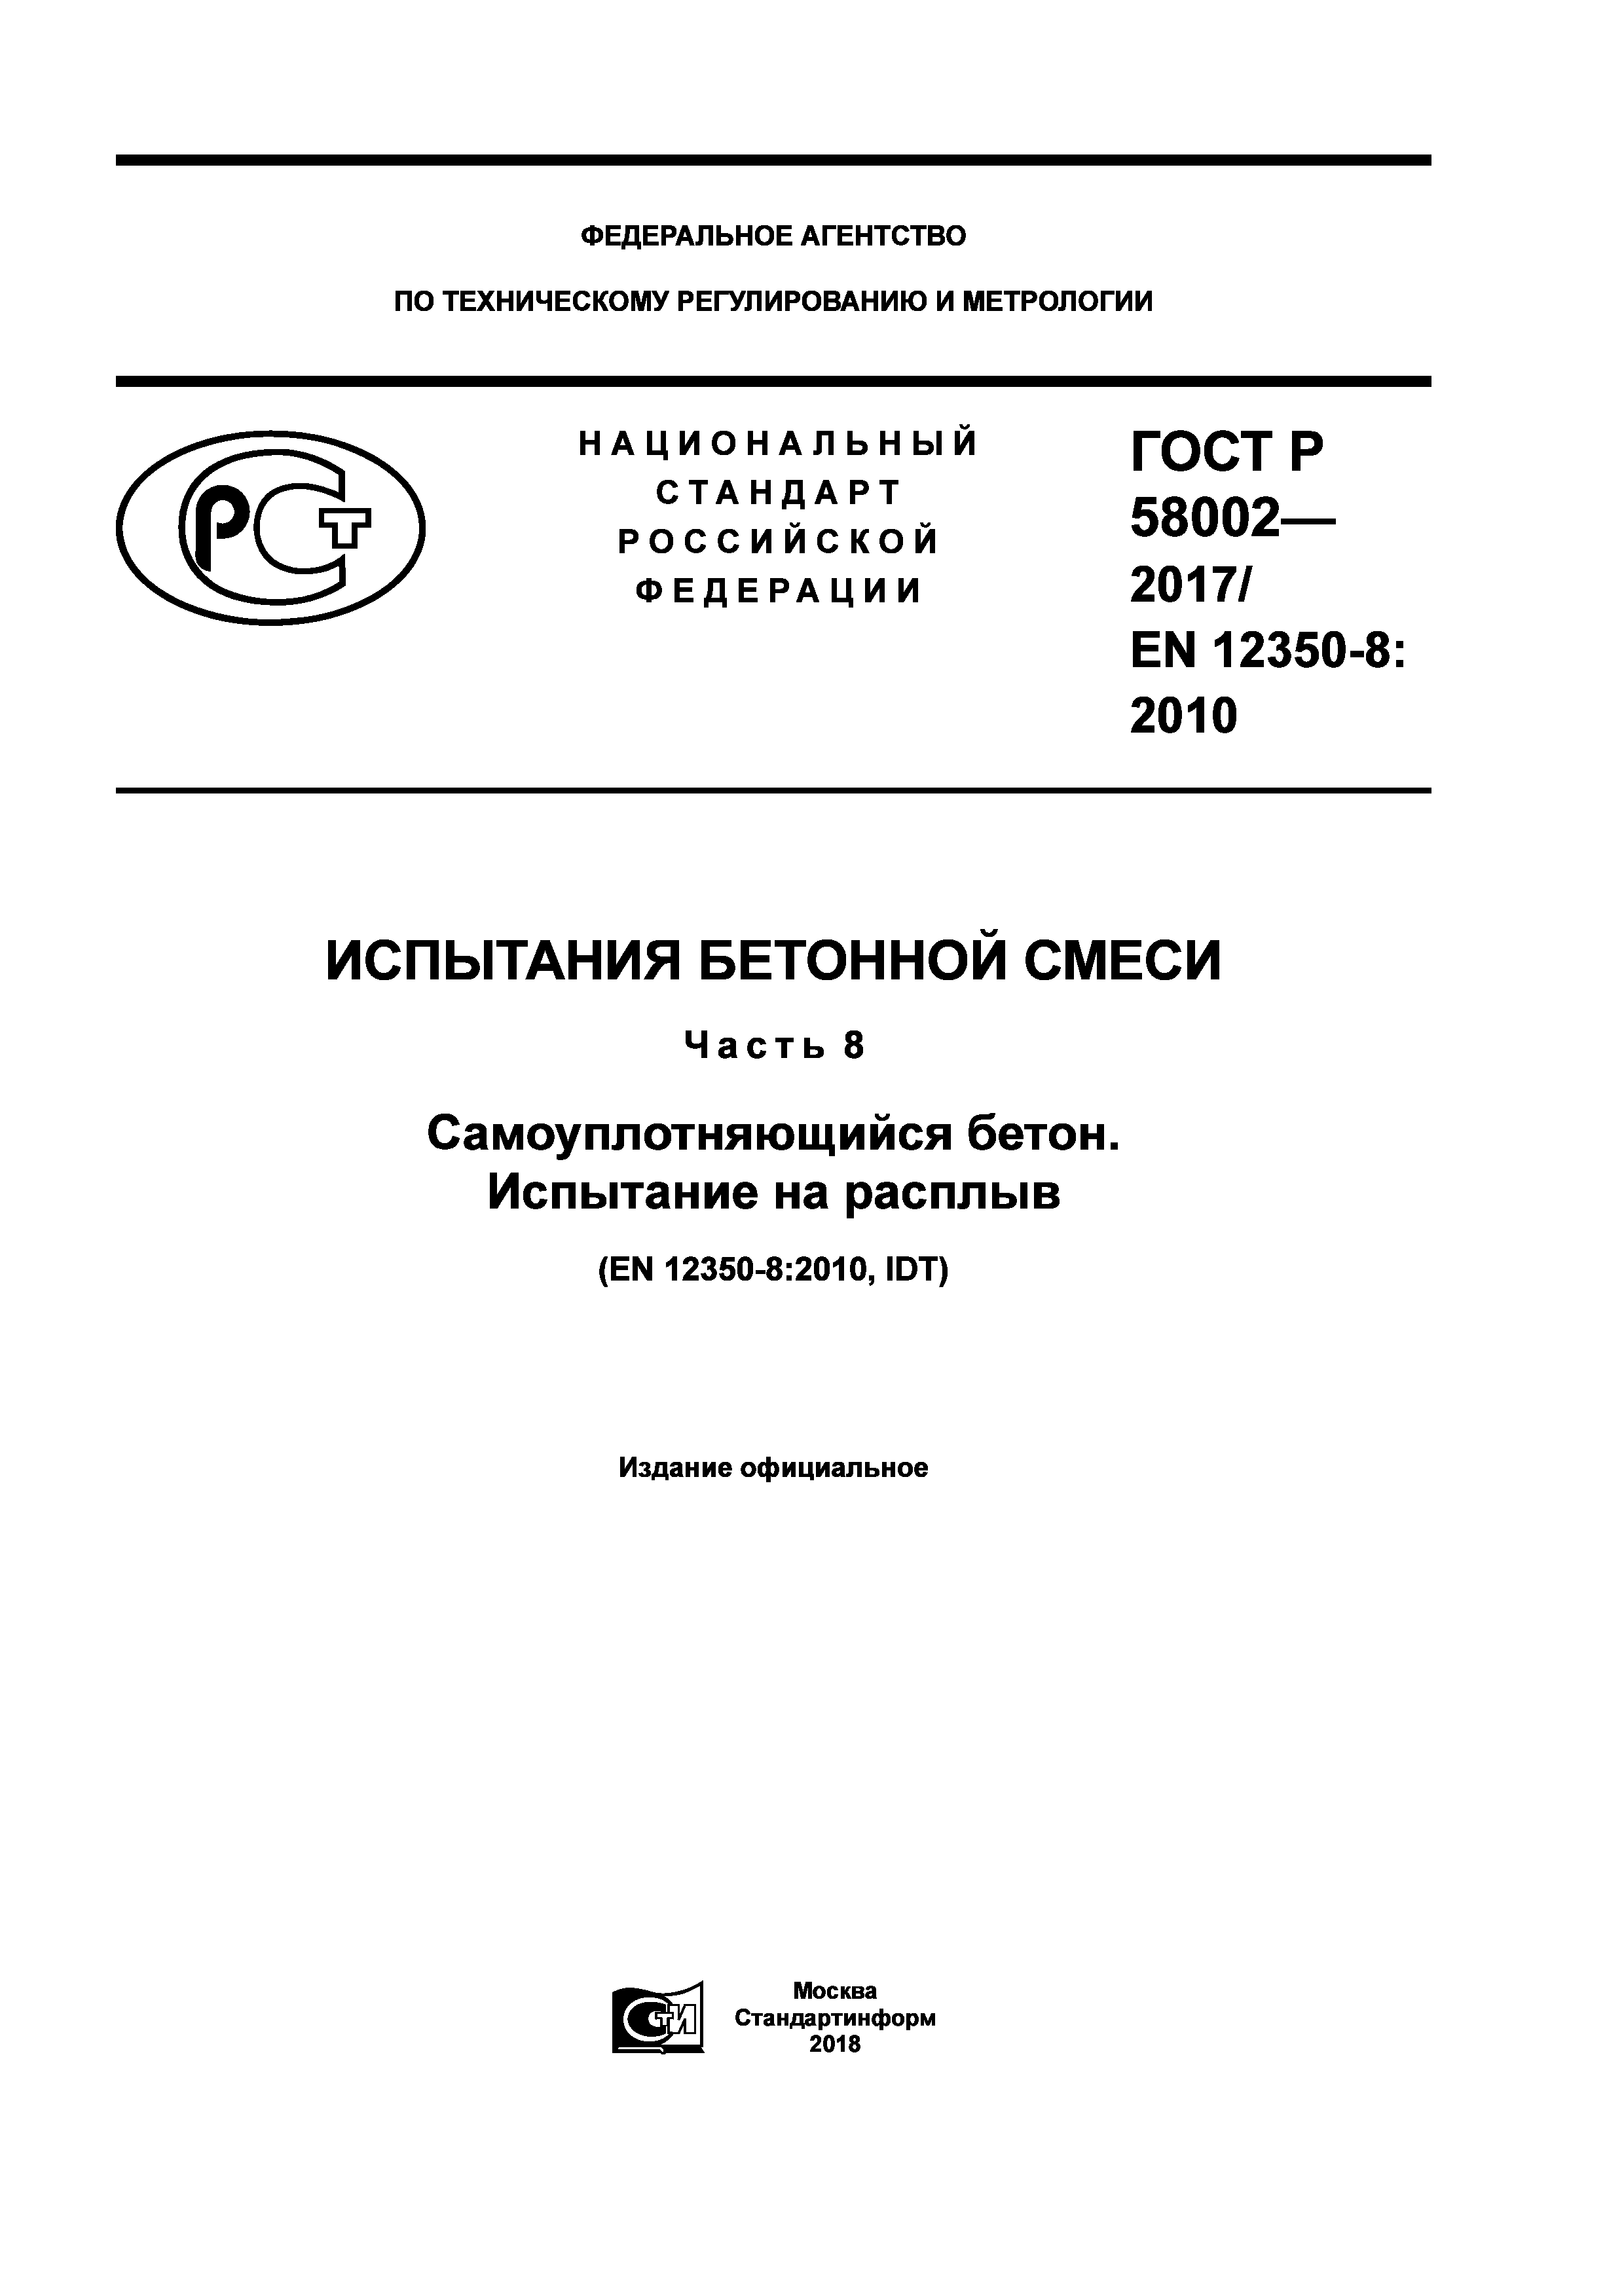 ГОСТ Р 58002-2017